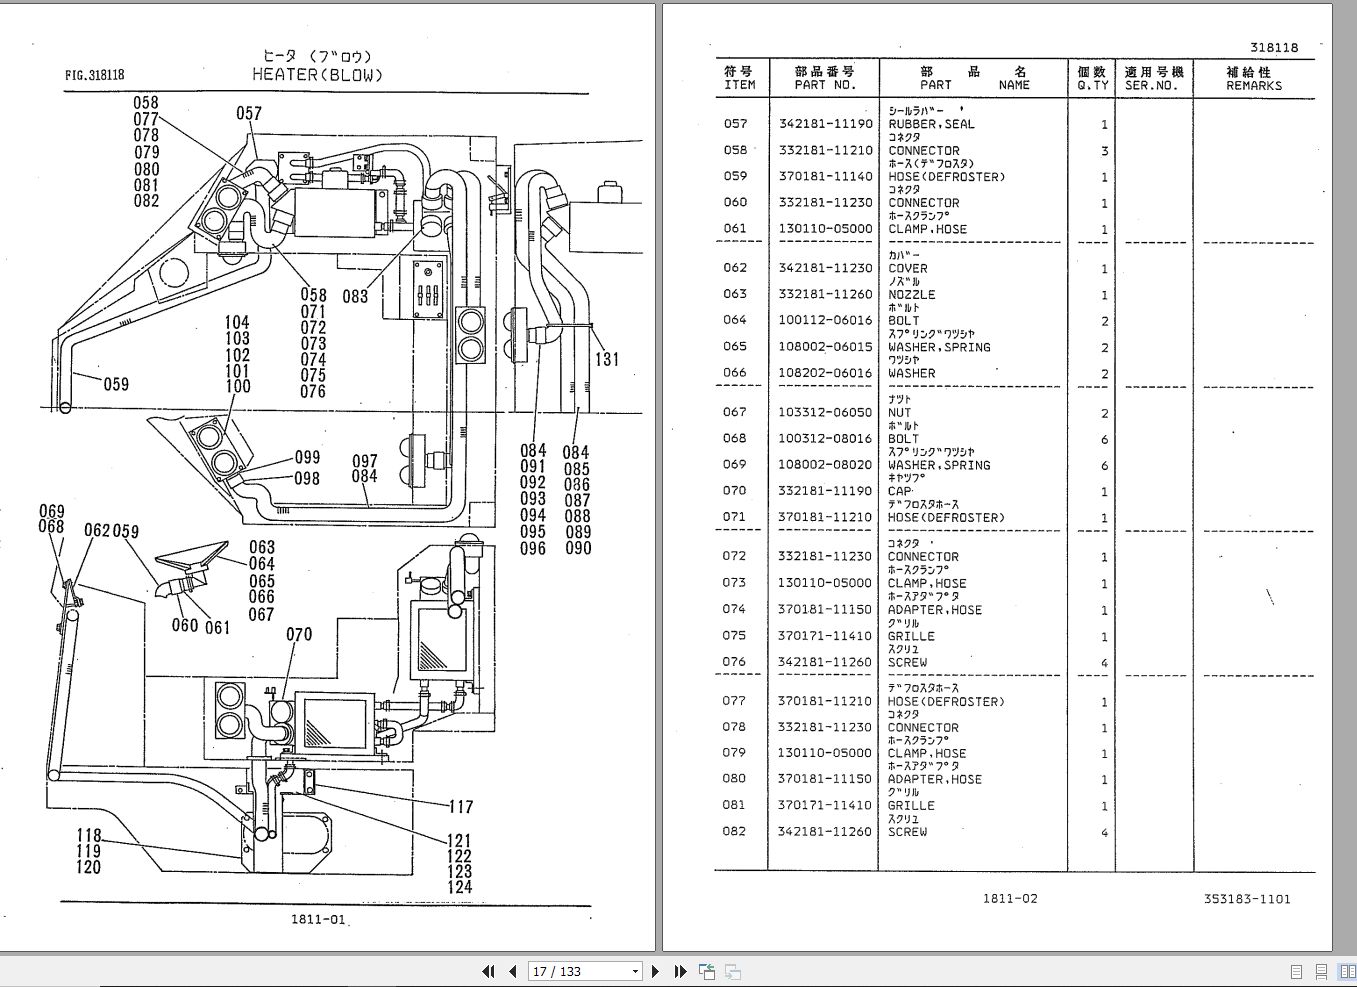 Furukawa Wheel Loader FL150-1 Parts List | Auto Repair Manual Forum ...